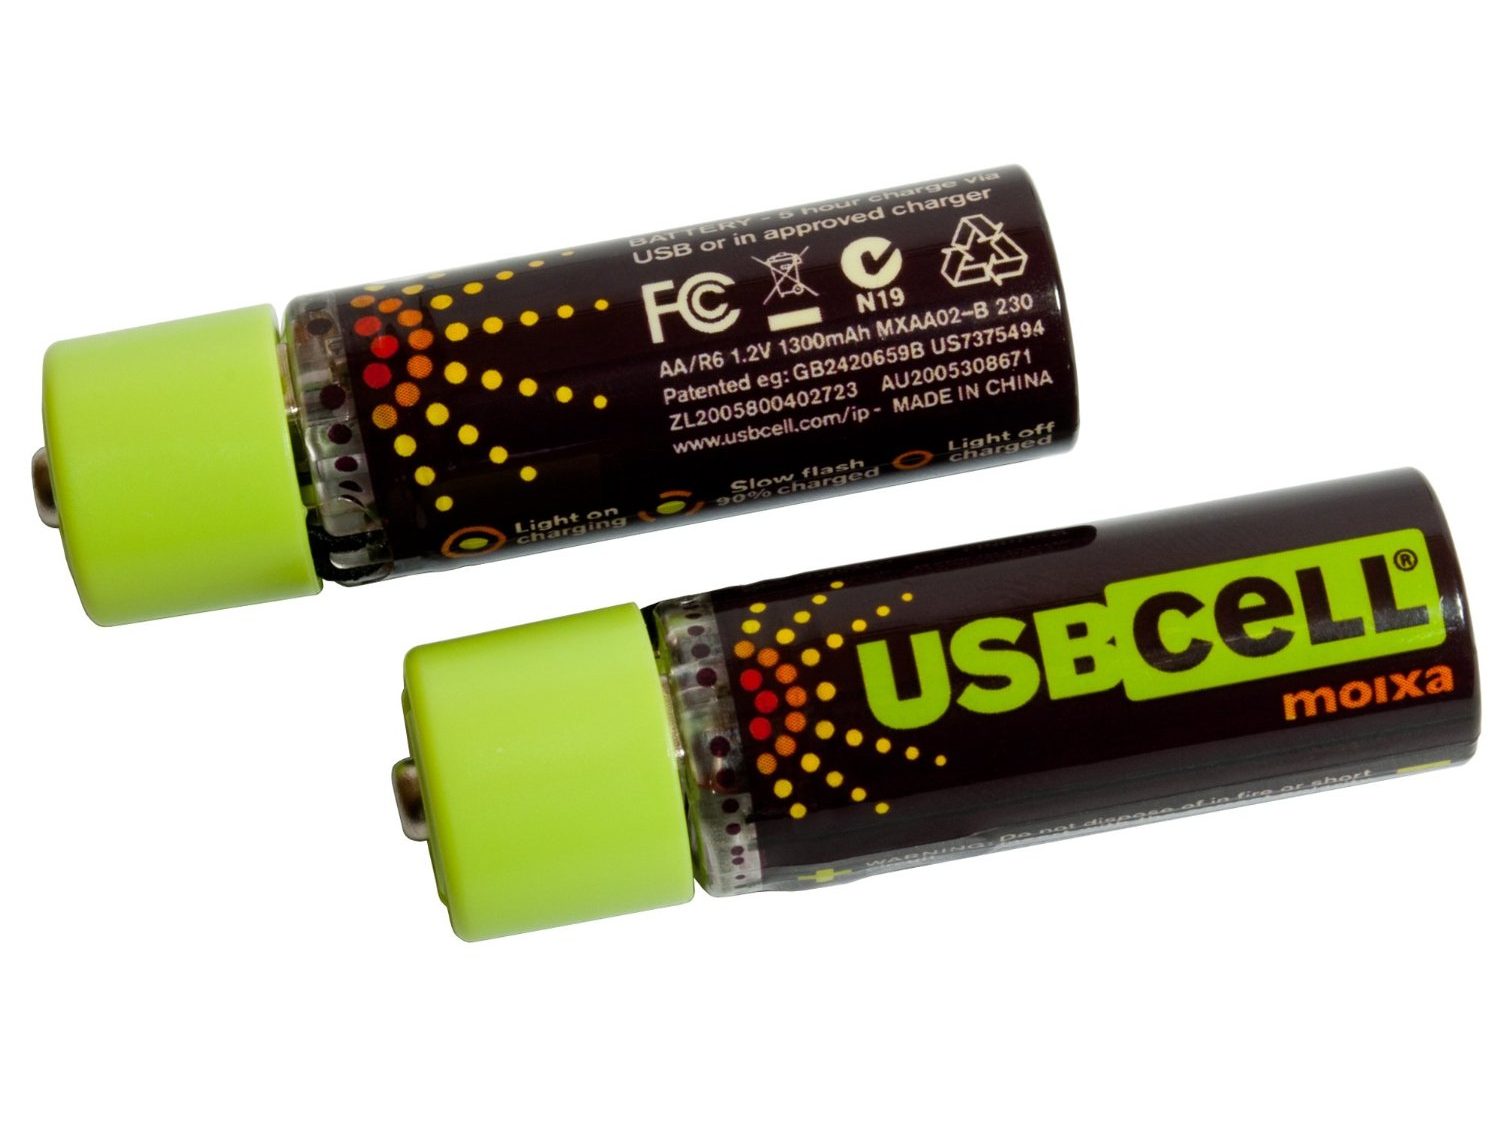 Cell battery. USB Rechargeable Battery. Cool gadget аккумуляторы. USB Cell. Аккумуляторы, флешки, ароматизаторы на желтом фоне.